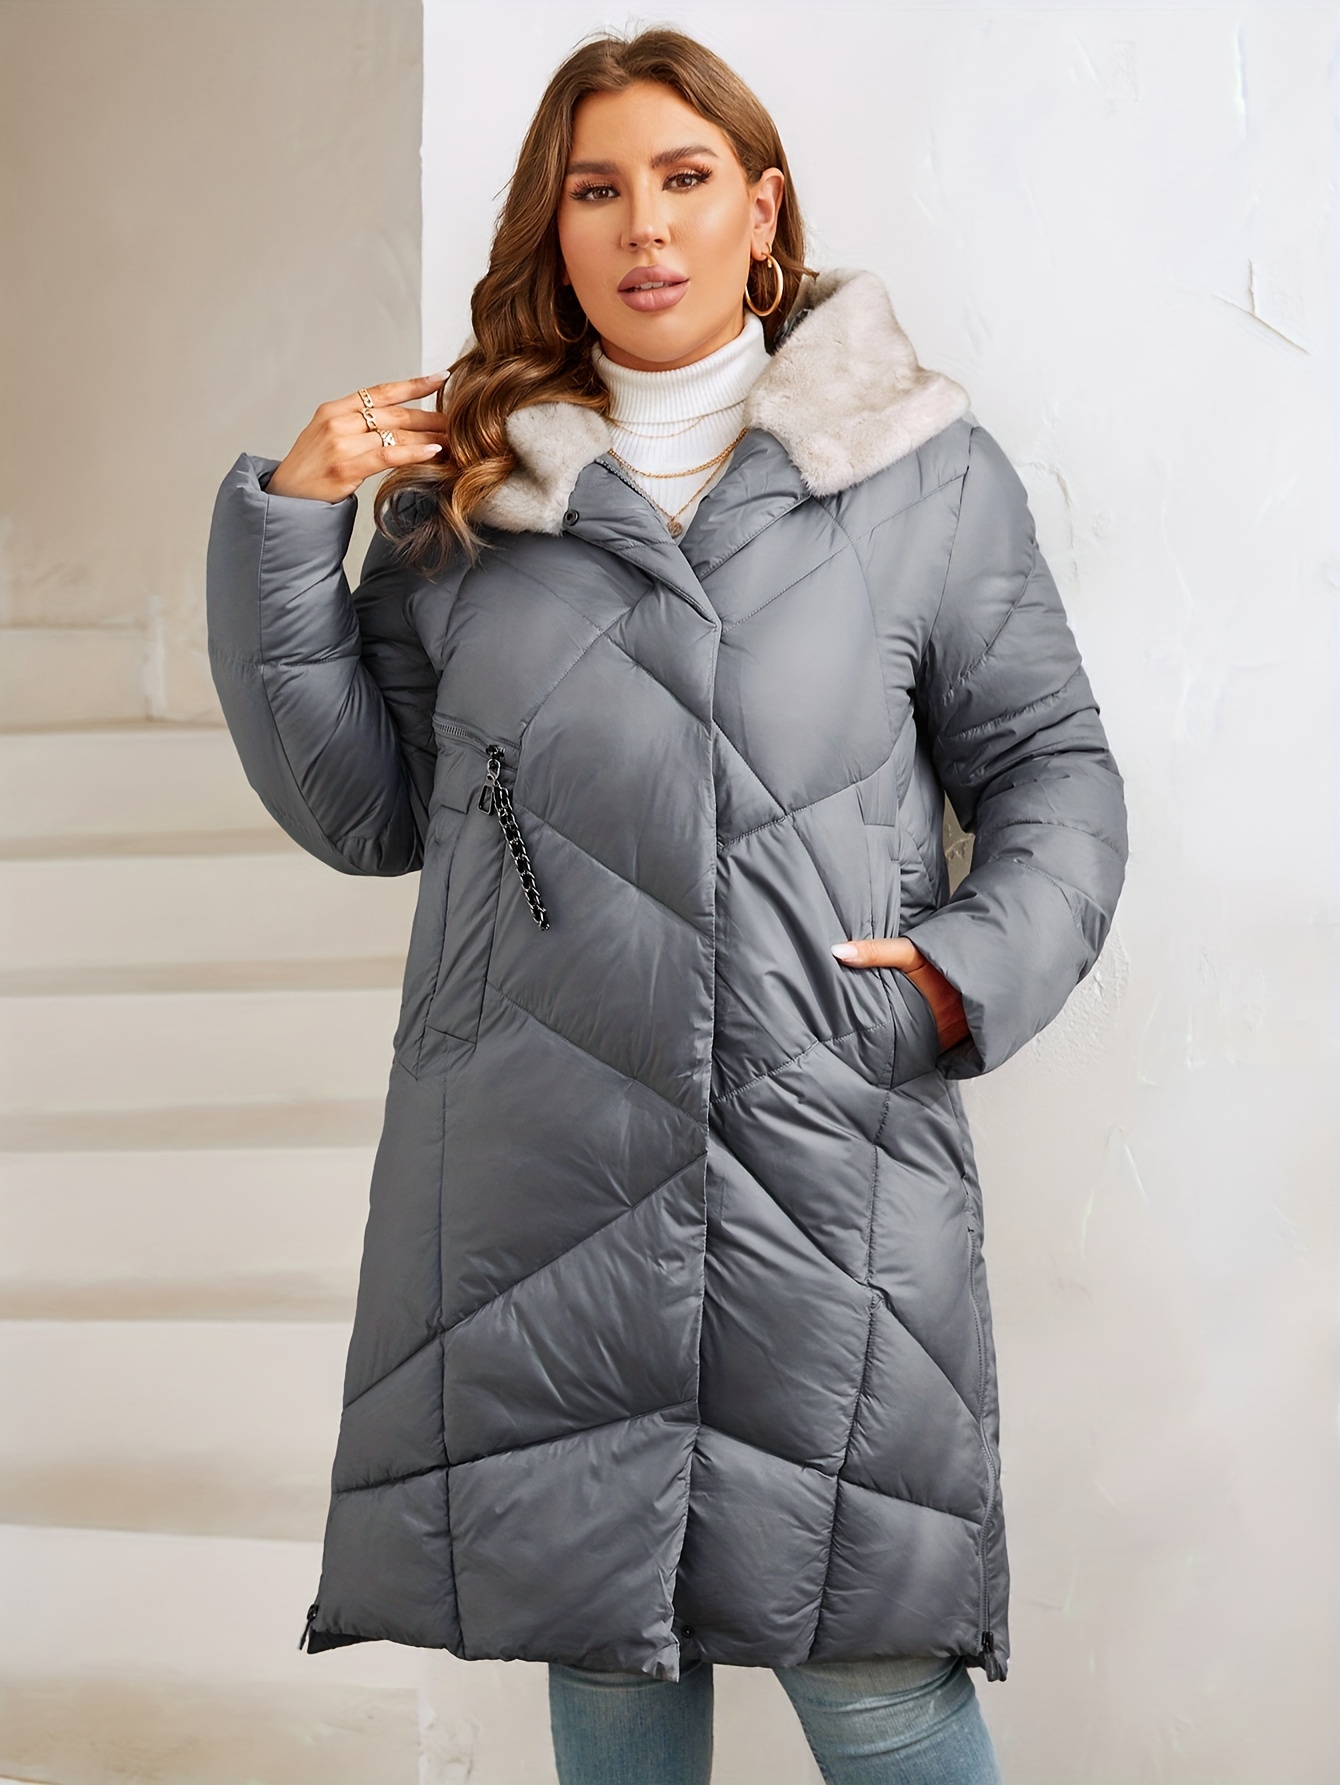 Plus Size Winter Coat, Quilted Jacket, Winter Coat Women, Plus Size  Clothing 